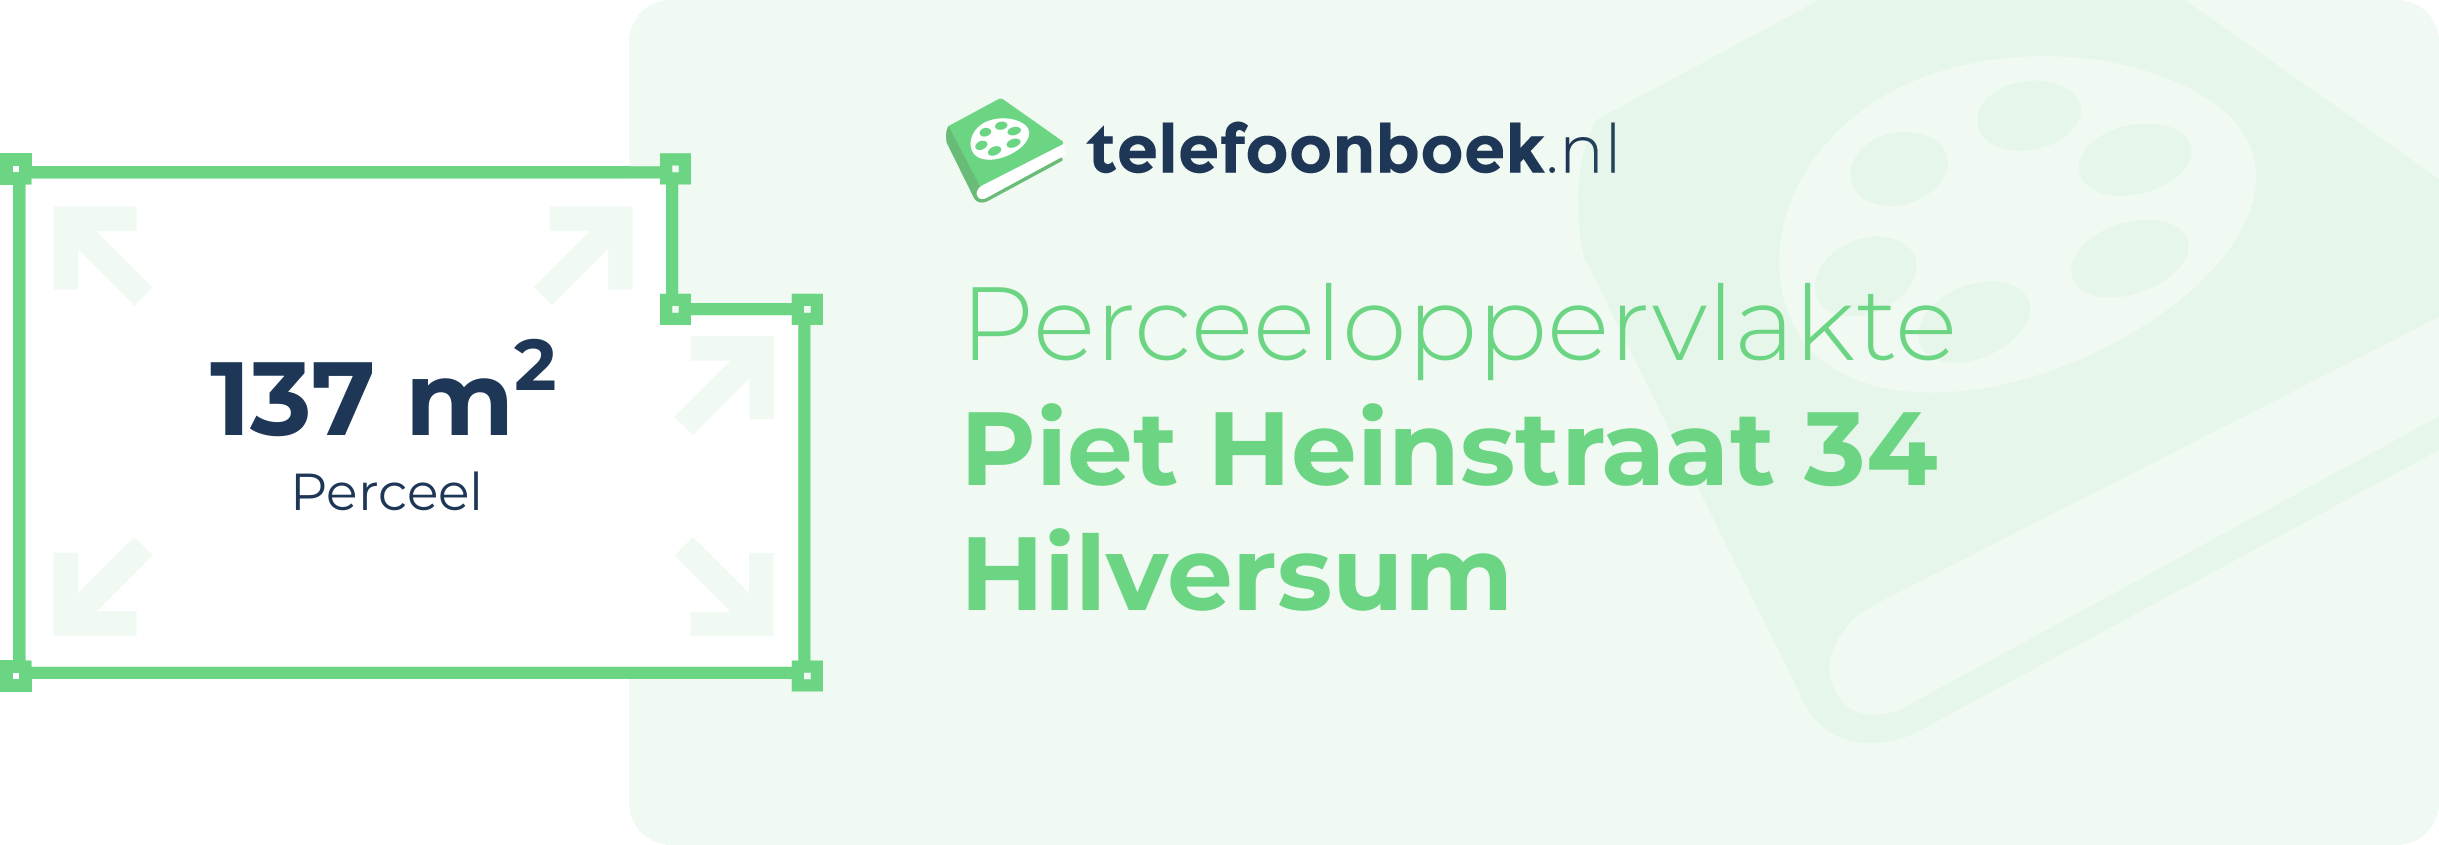 Perceeloppervlakte Piet Heinstraat 34 Hilversum